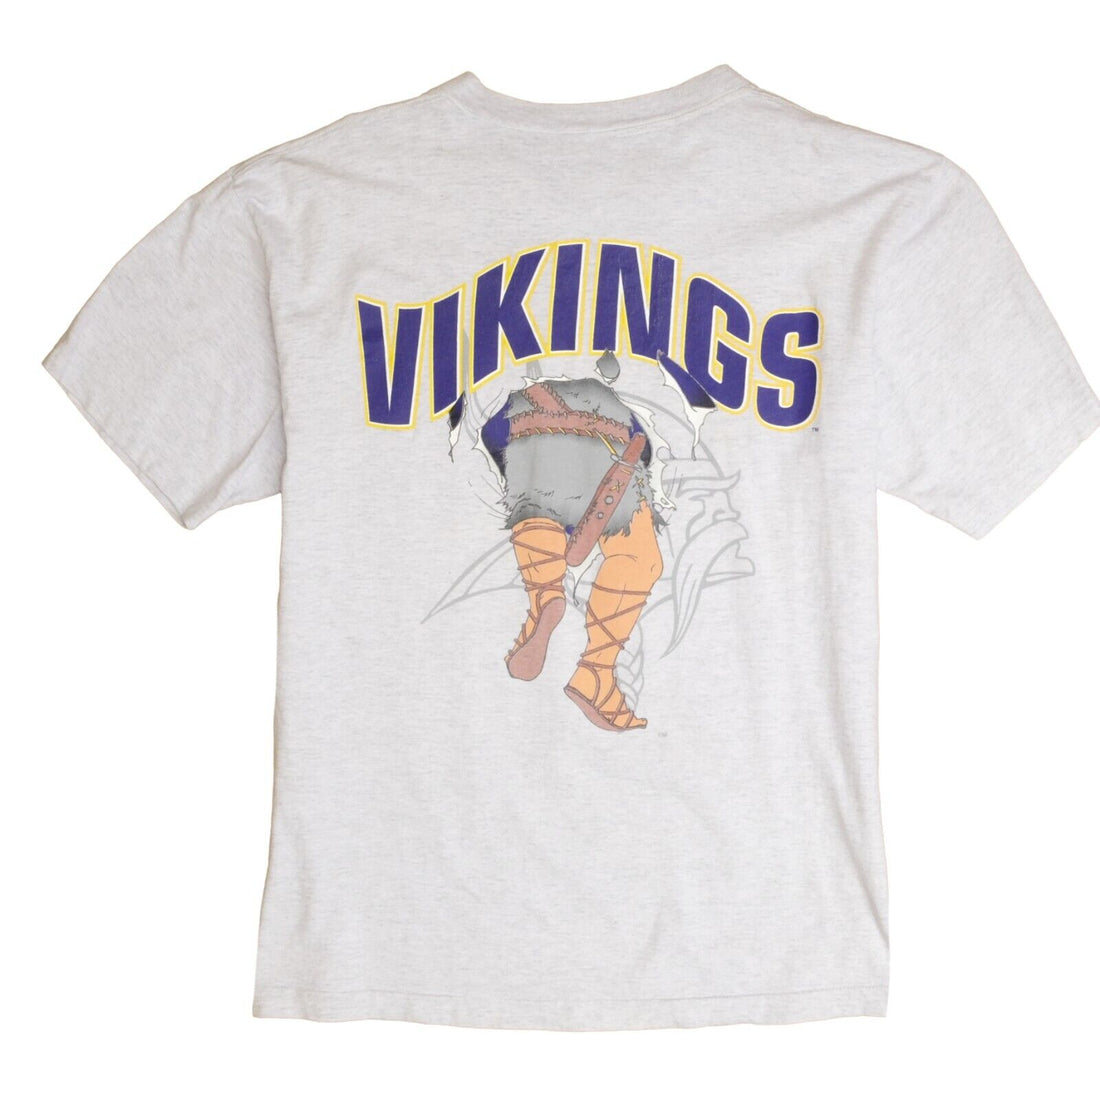 Vintage Minnesota Vikings Breakthrough Nutmeg T-Shirt Size Medium 1993 90s NFL